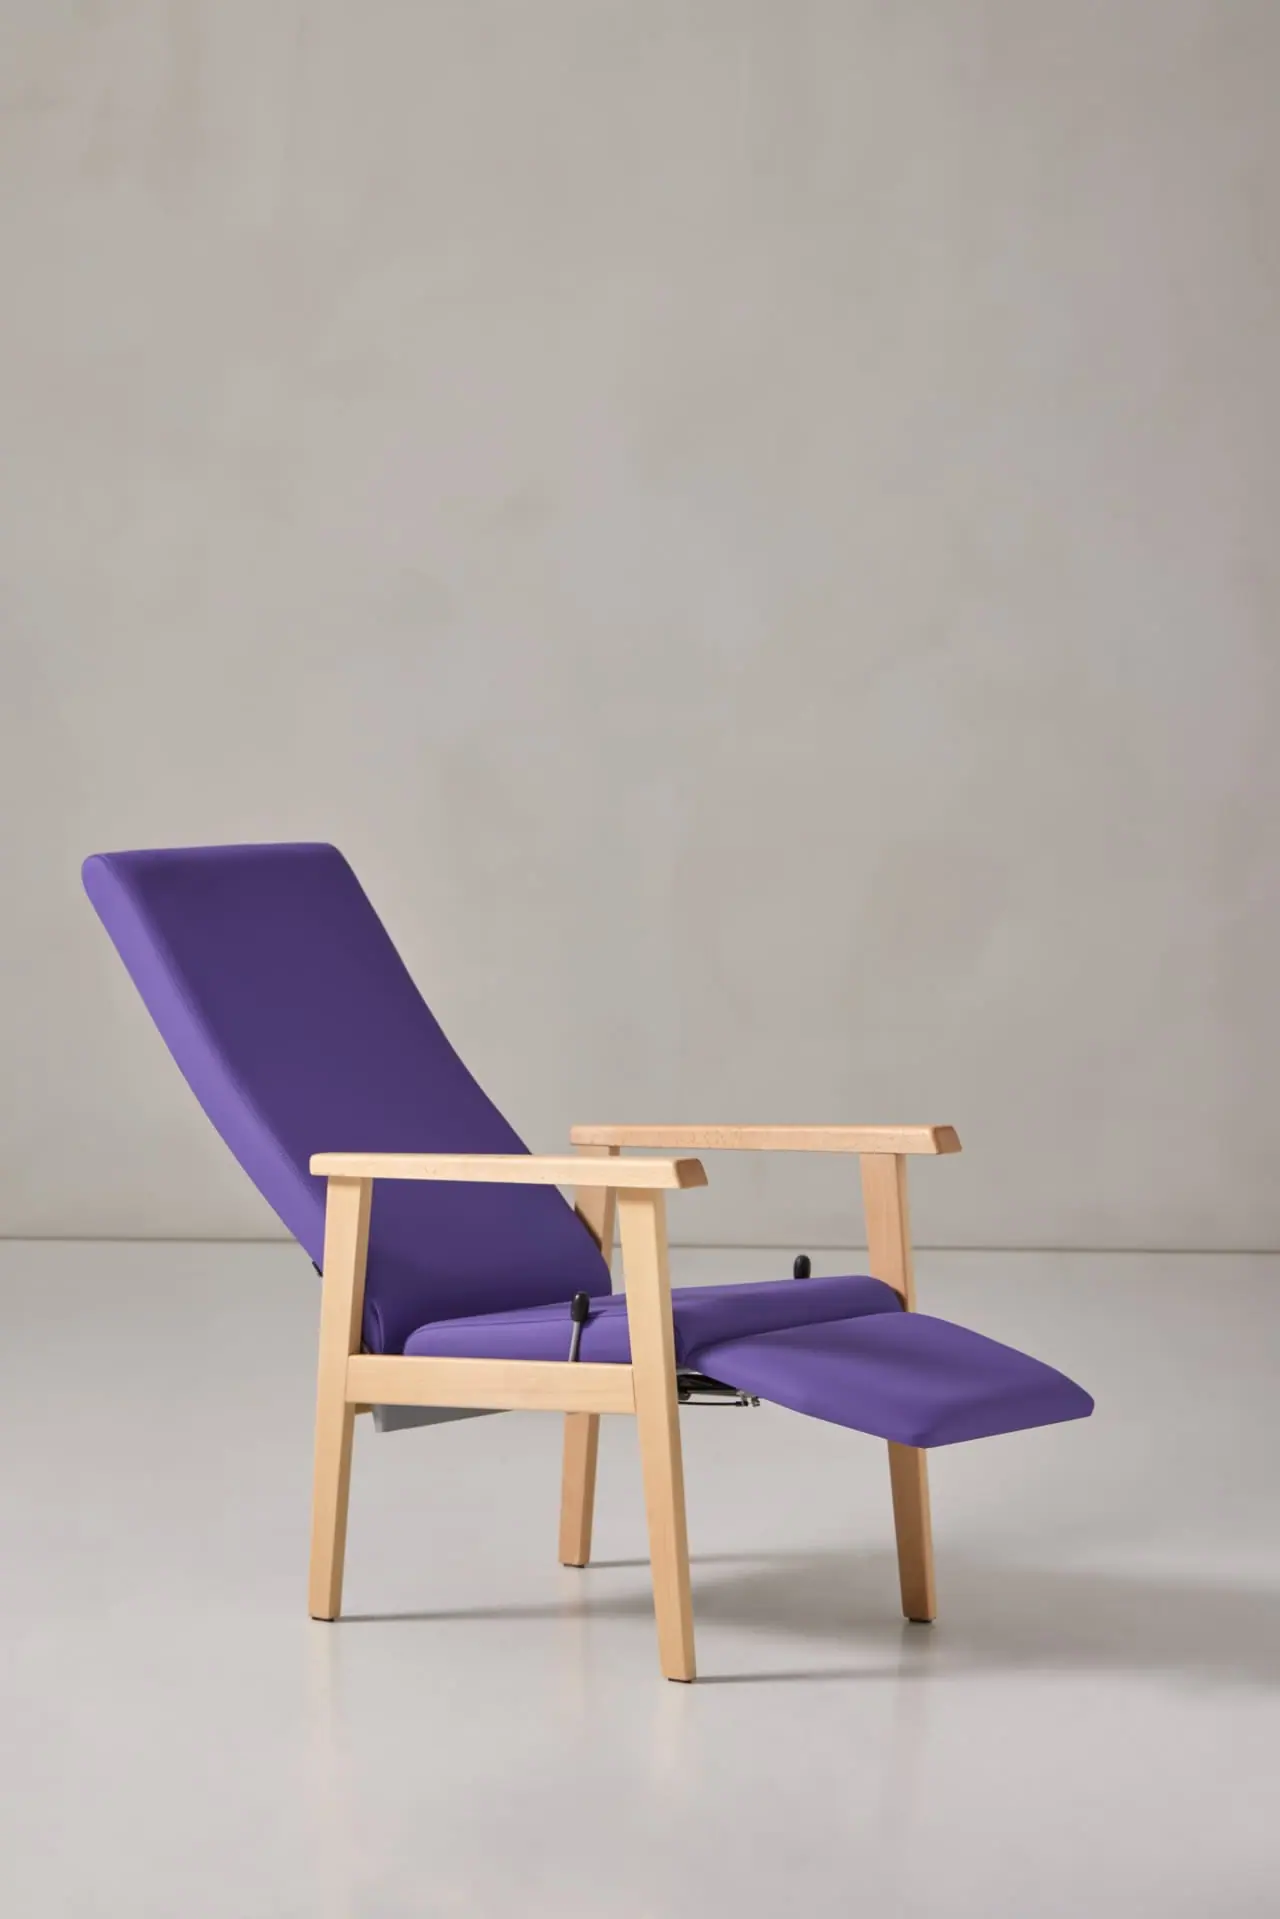 seniorcare-madison-lounge-chairs-02